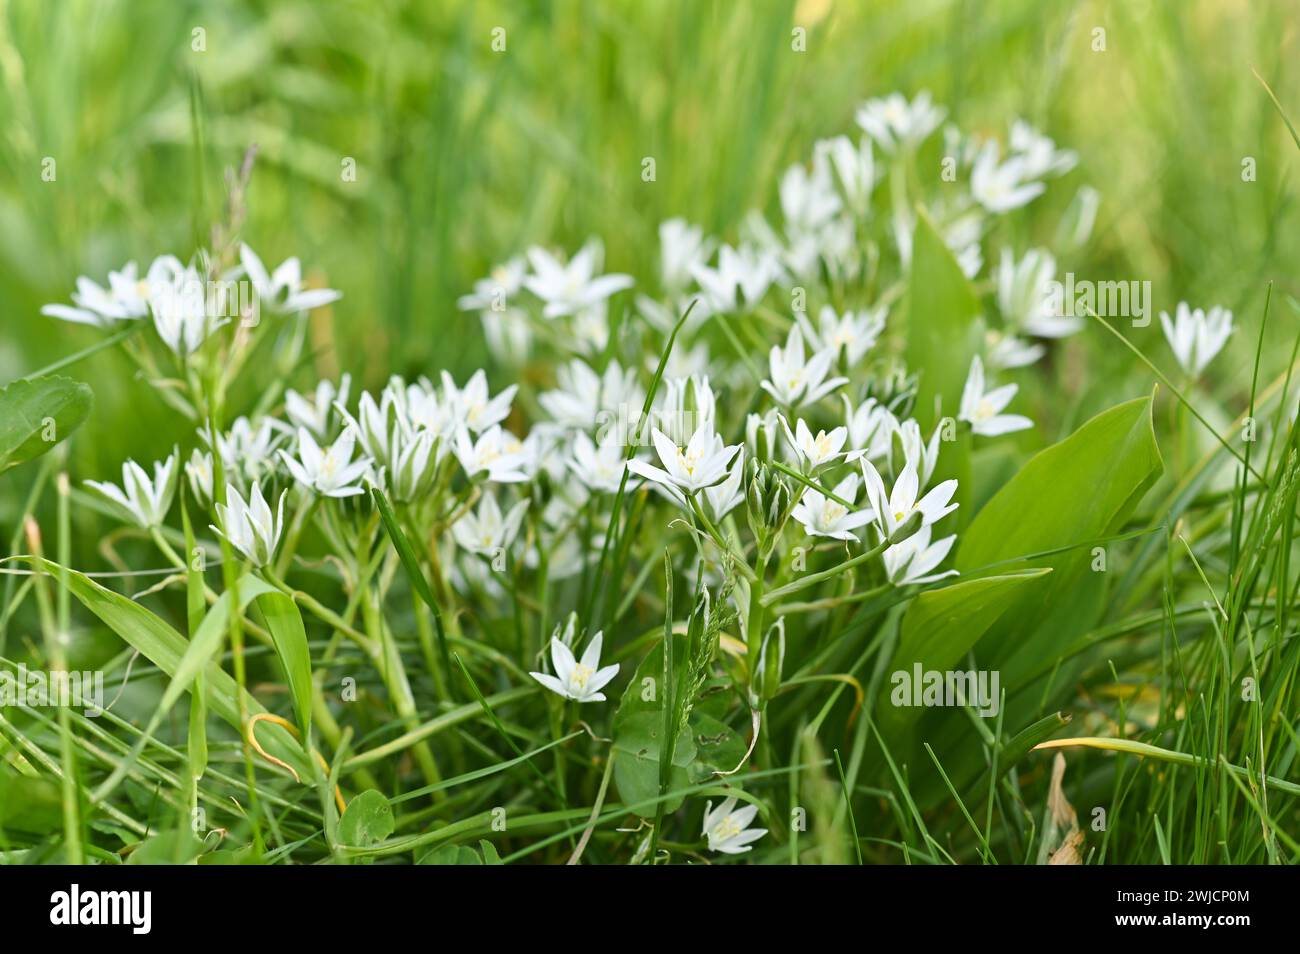 floral background of white ornithogalum flowers. Stock Photo